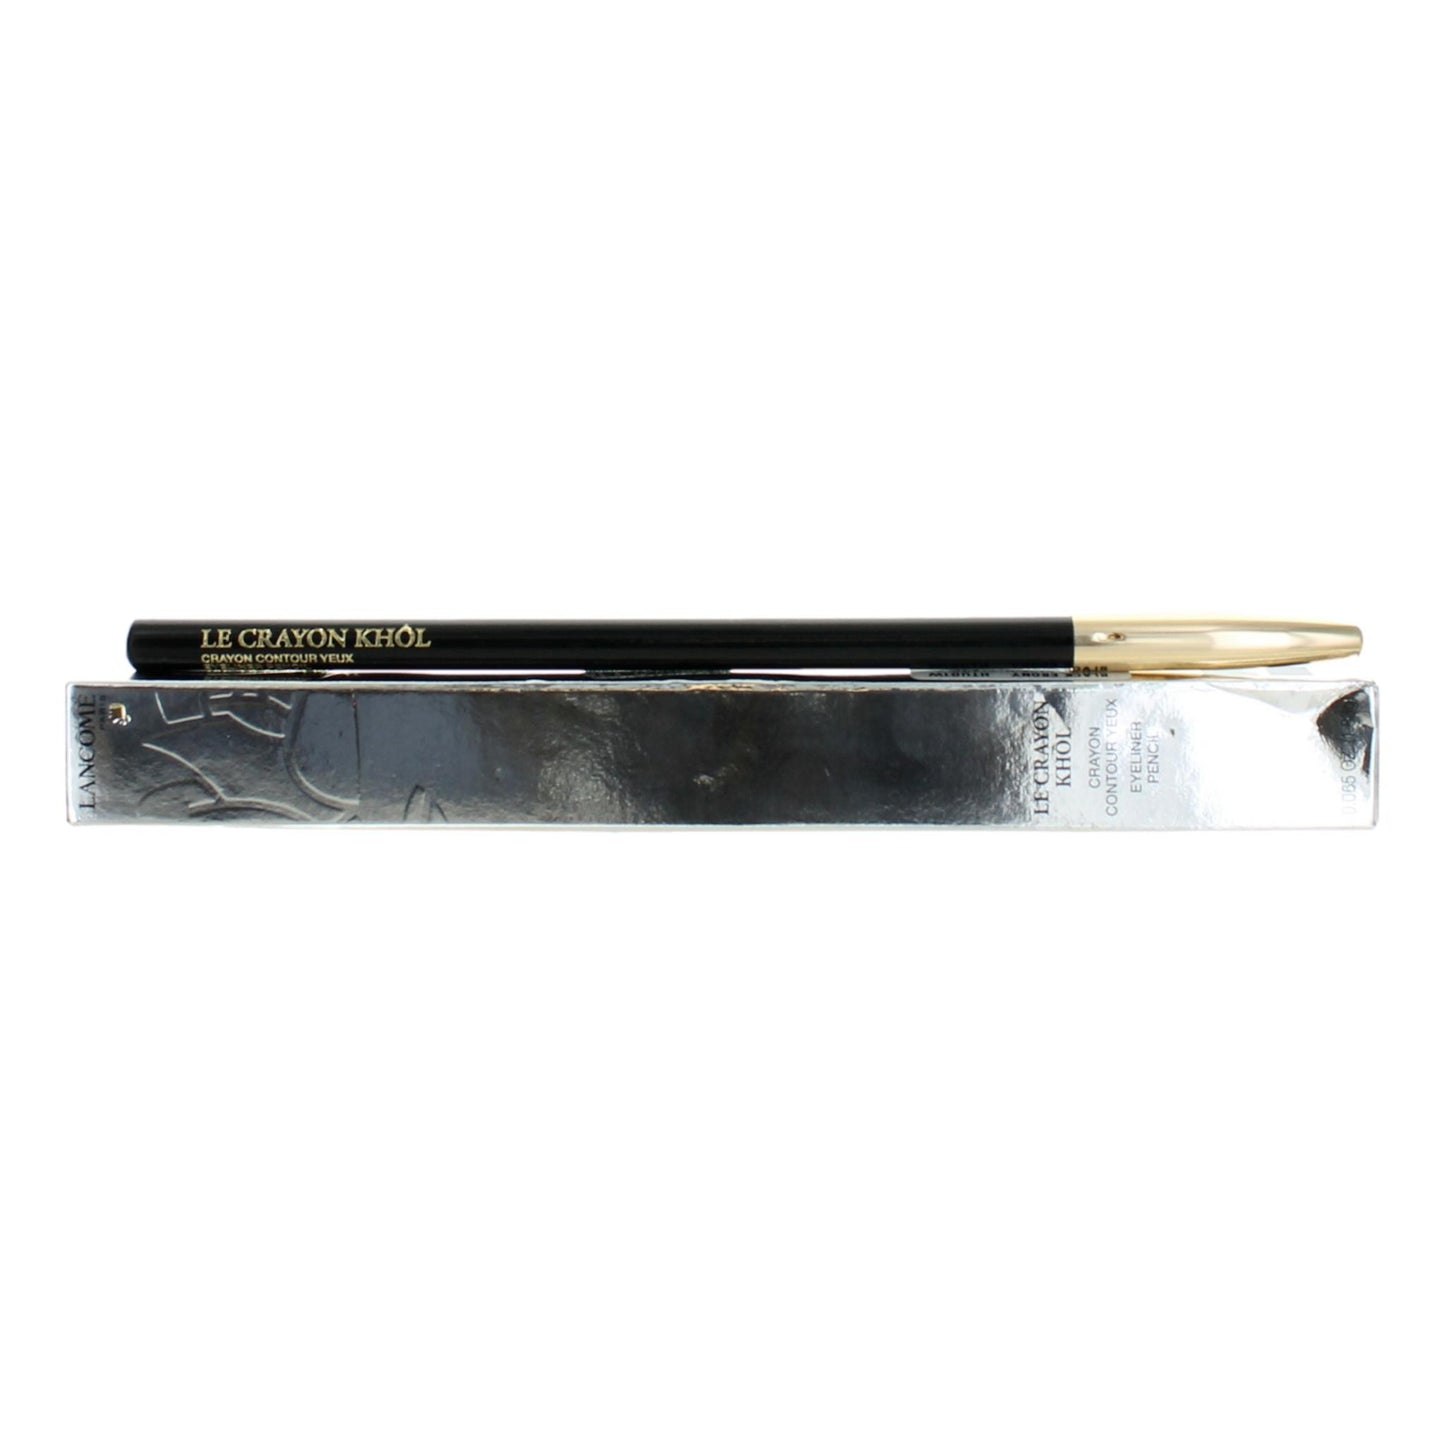 Lancome Le Crayon Khol by Lancome, .065 oz Eyeliner - 602 Black Ebony